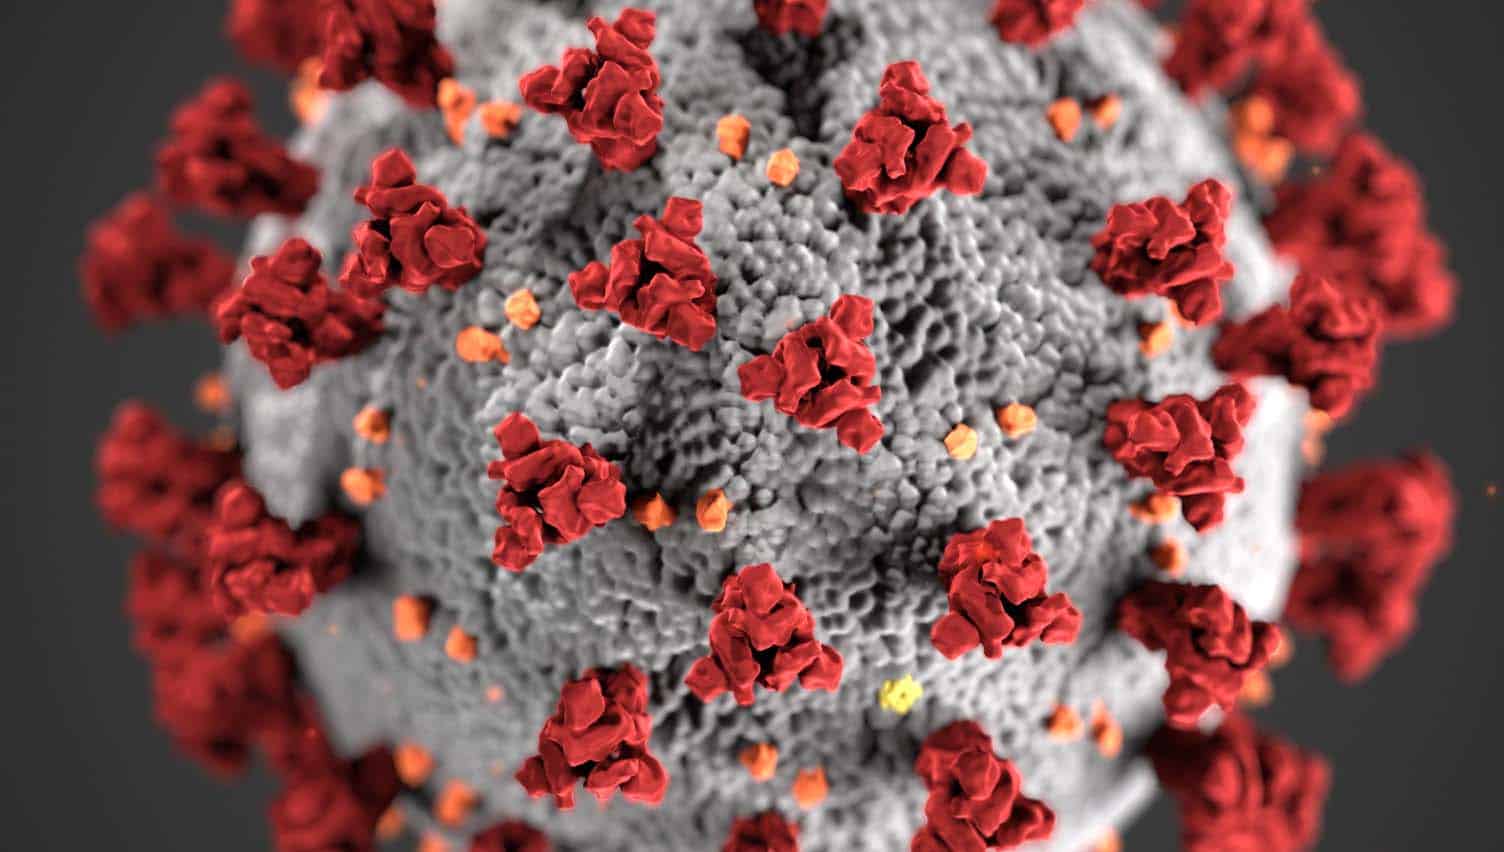 O coronavirus SARS-Cov-2 causador da Covid-19 e da pandemia global de 2020